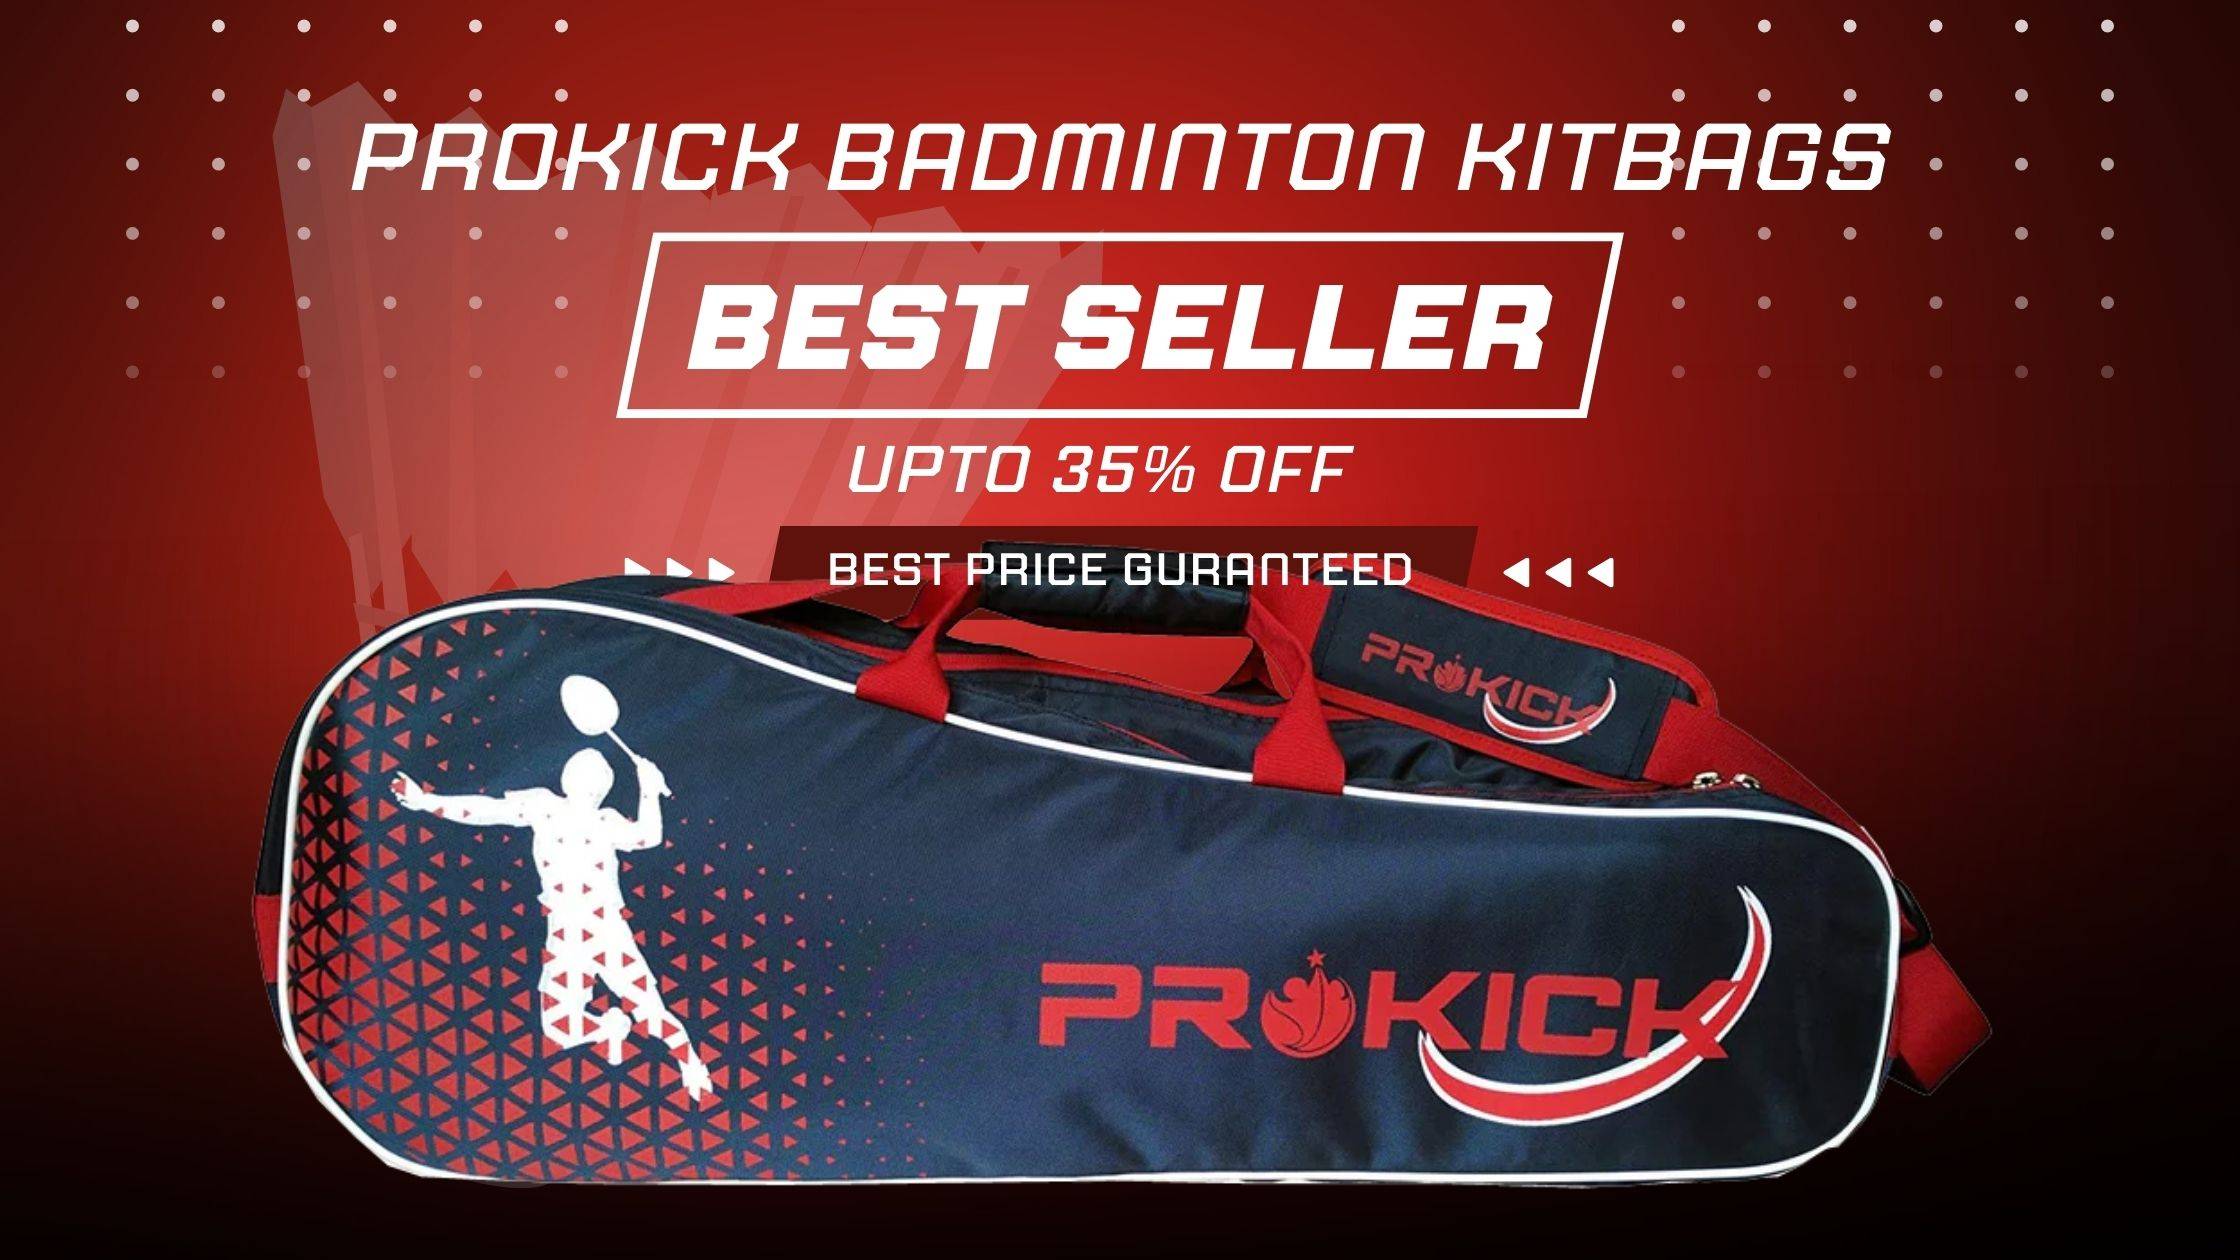 Prokicksports Best Sports Store for Badminton Cricket Tennis